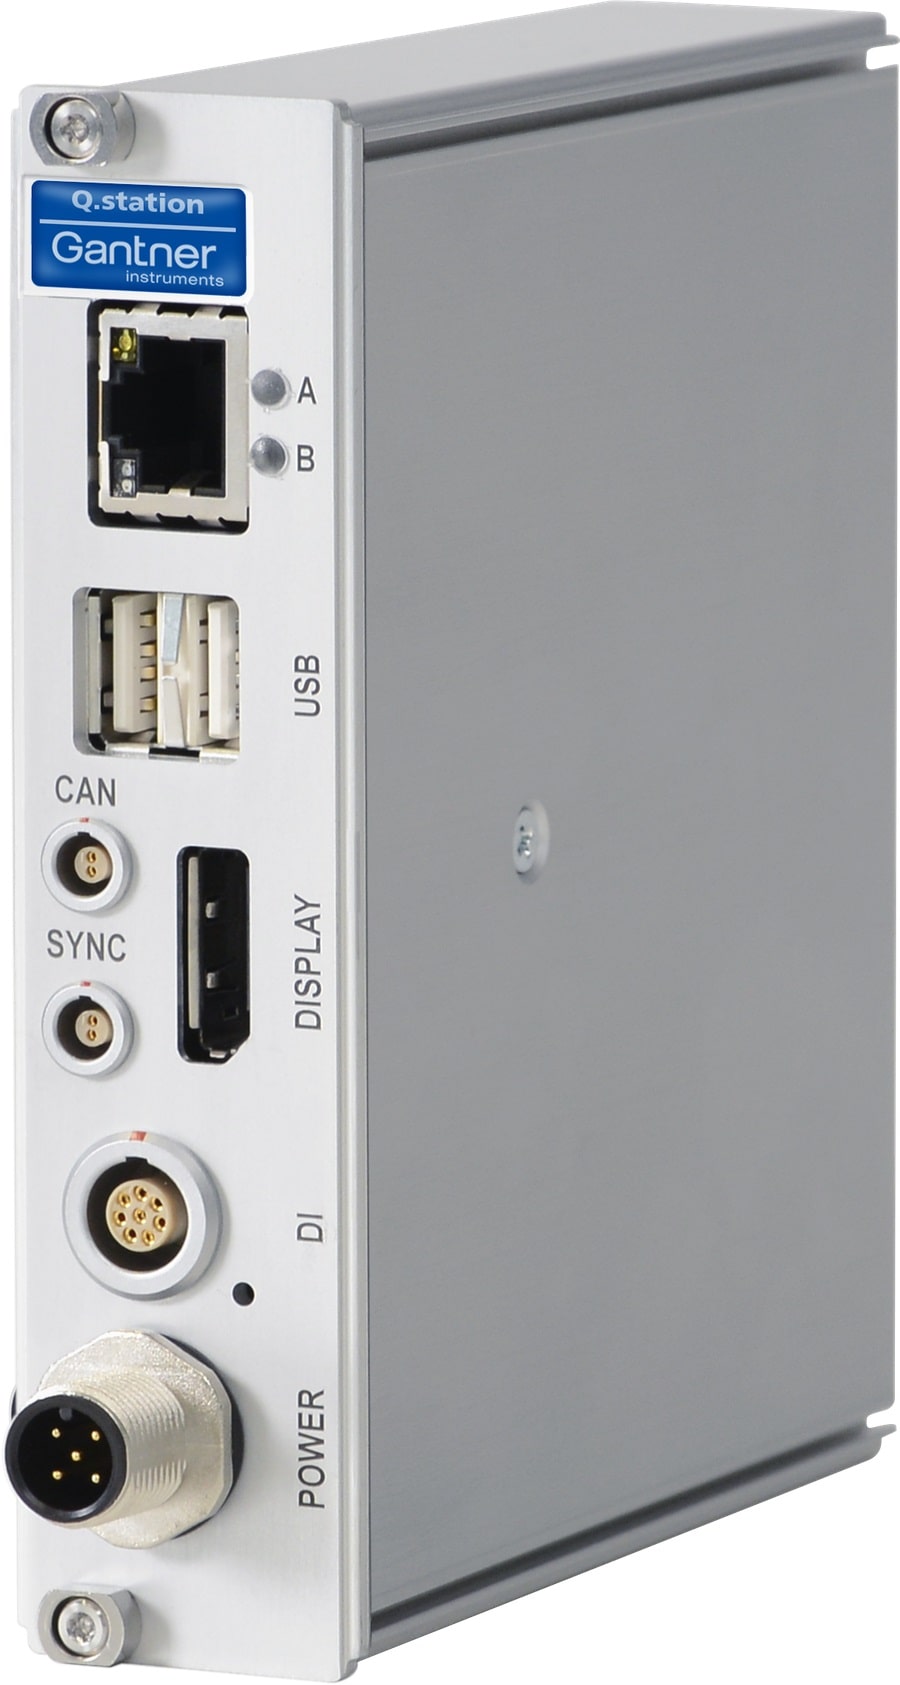 Q.brixx X station T Edge Controller Neuer Power Controller für Q.serie X  Serie